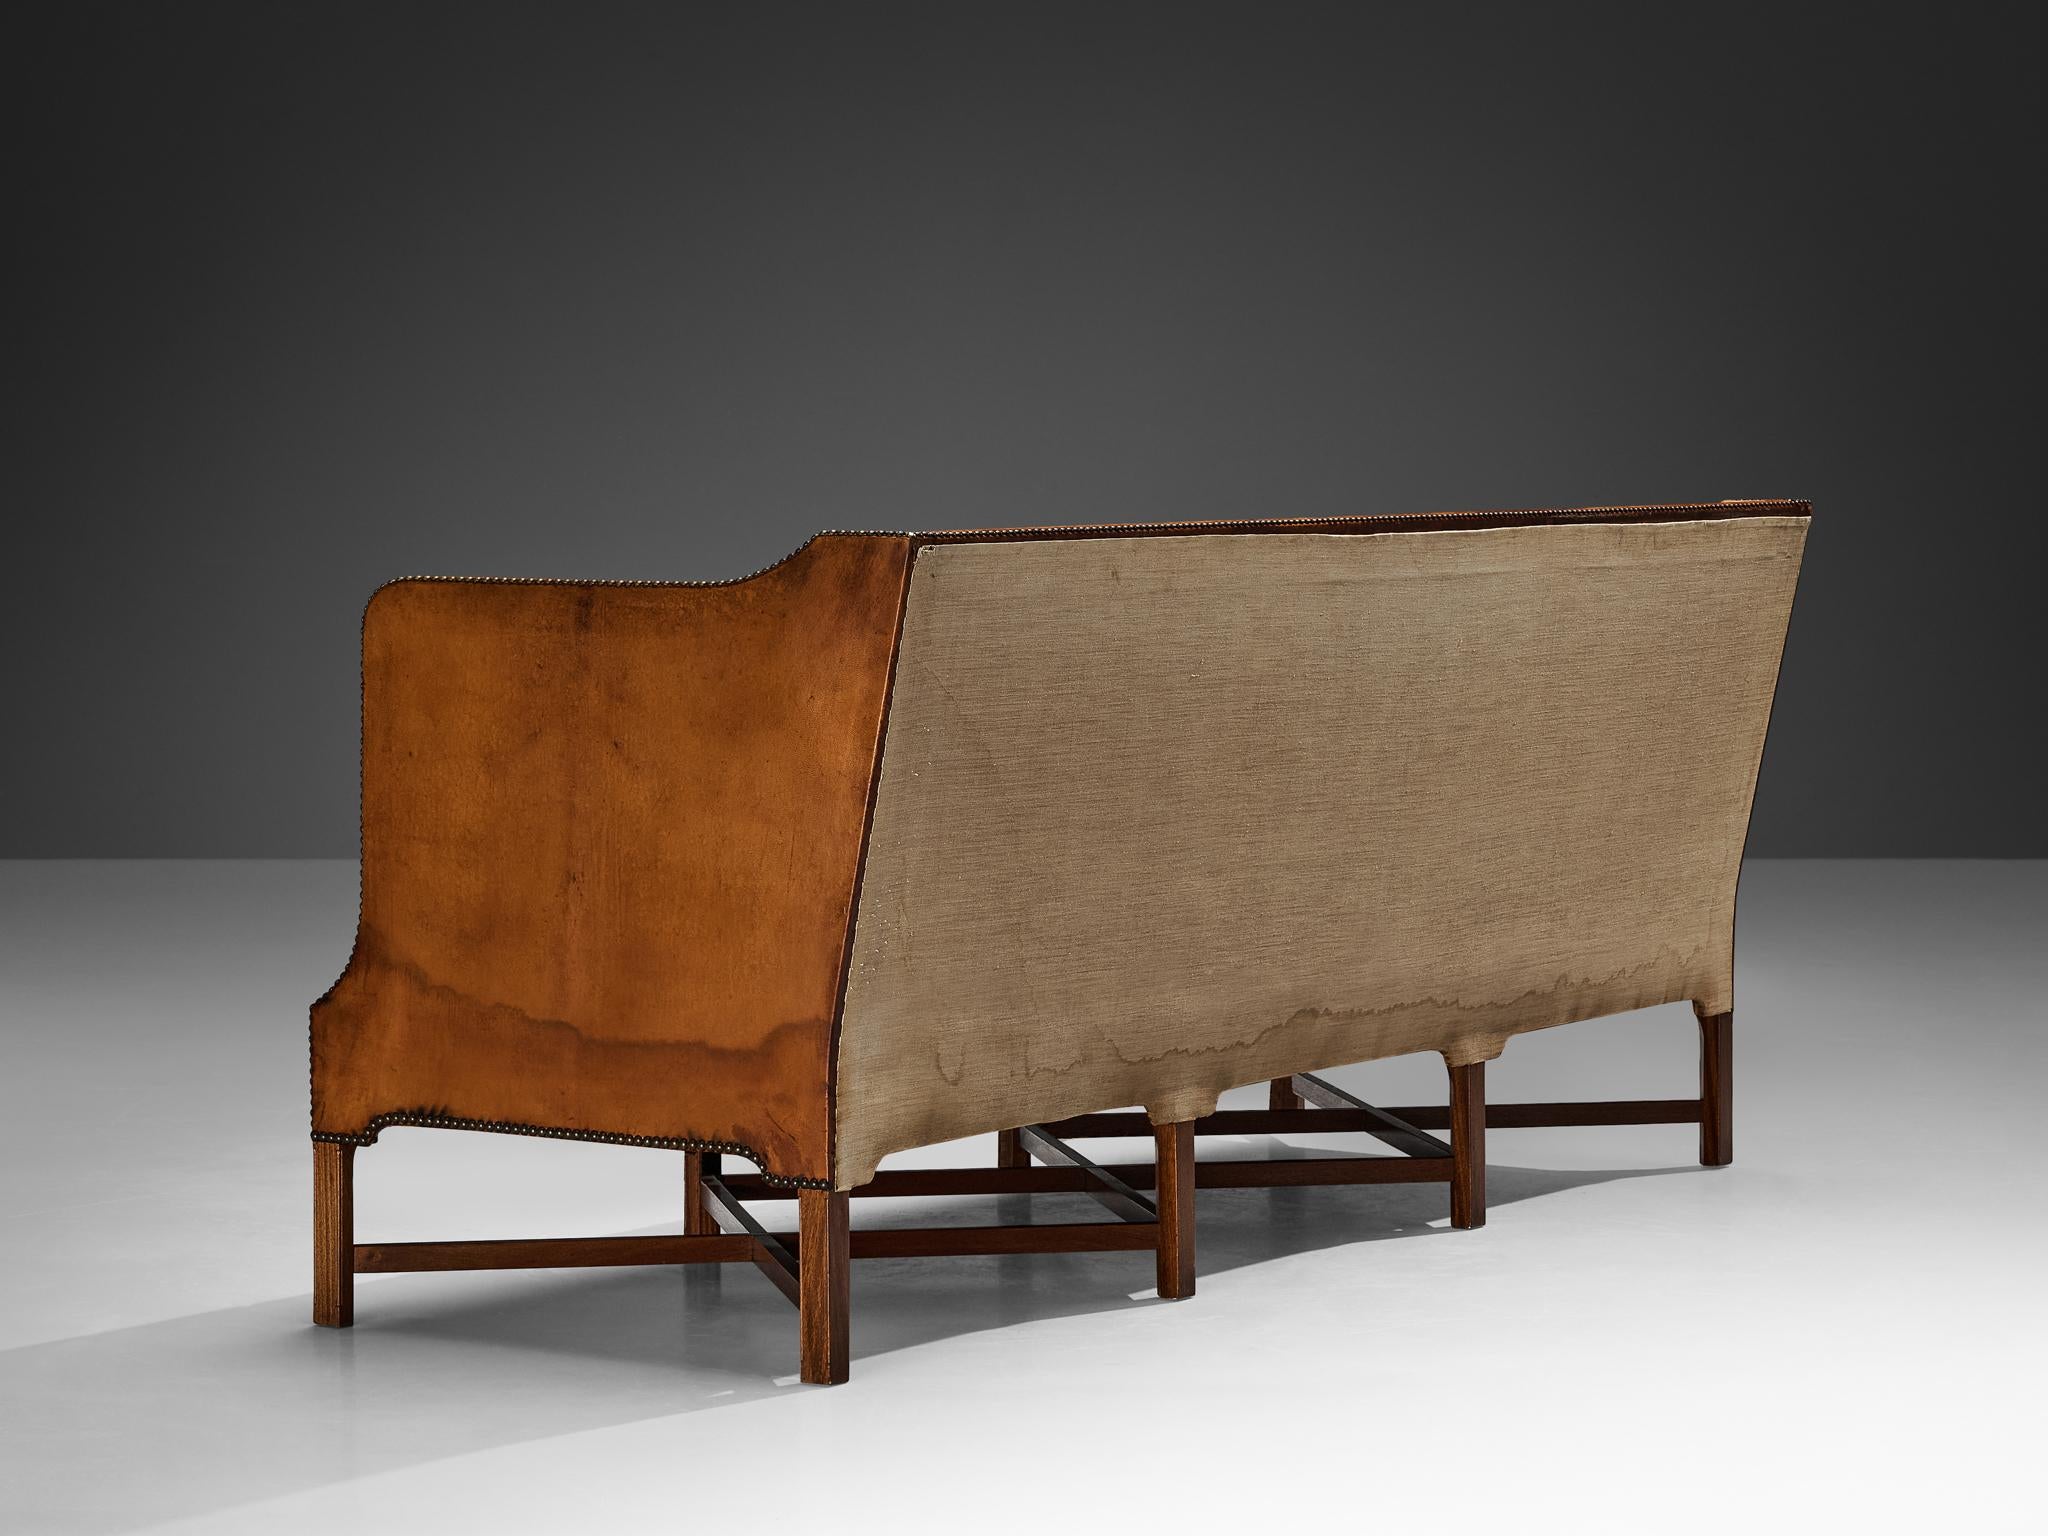 Kaare Klint for Rud Rasmussen Sofa in Original Niger Leather and Mahogany